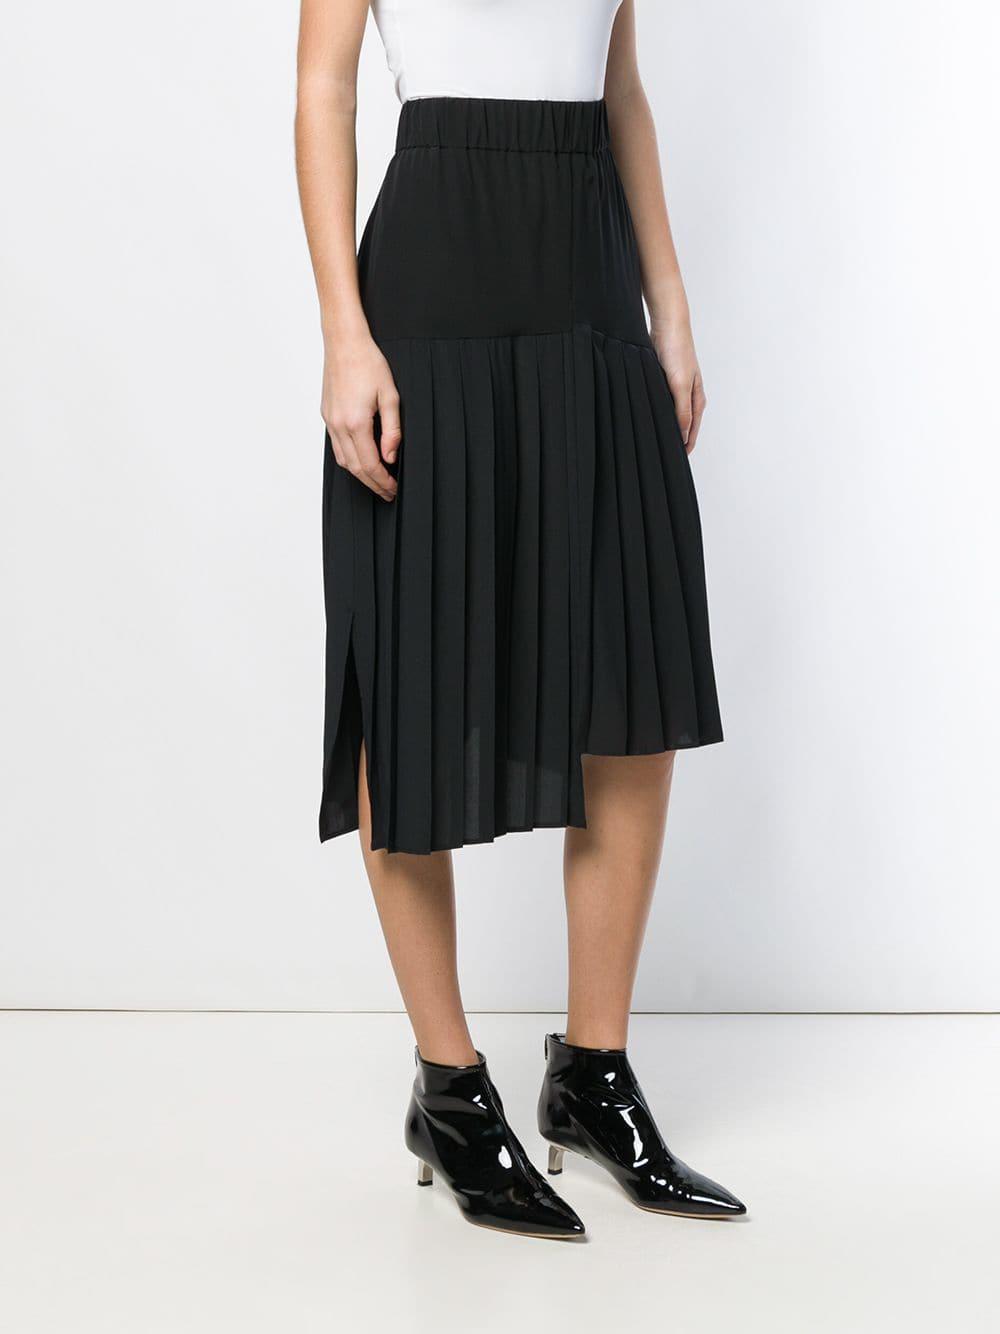 Isabel Marant Synthetic Asymmetric Pleated Skirt in Black - Lyst